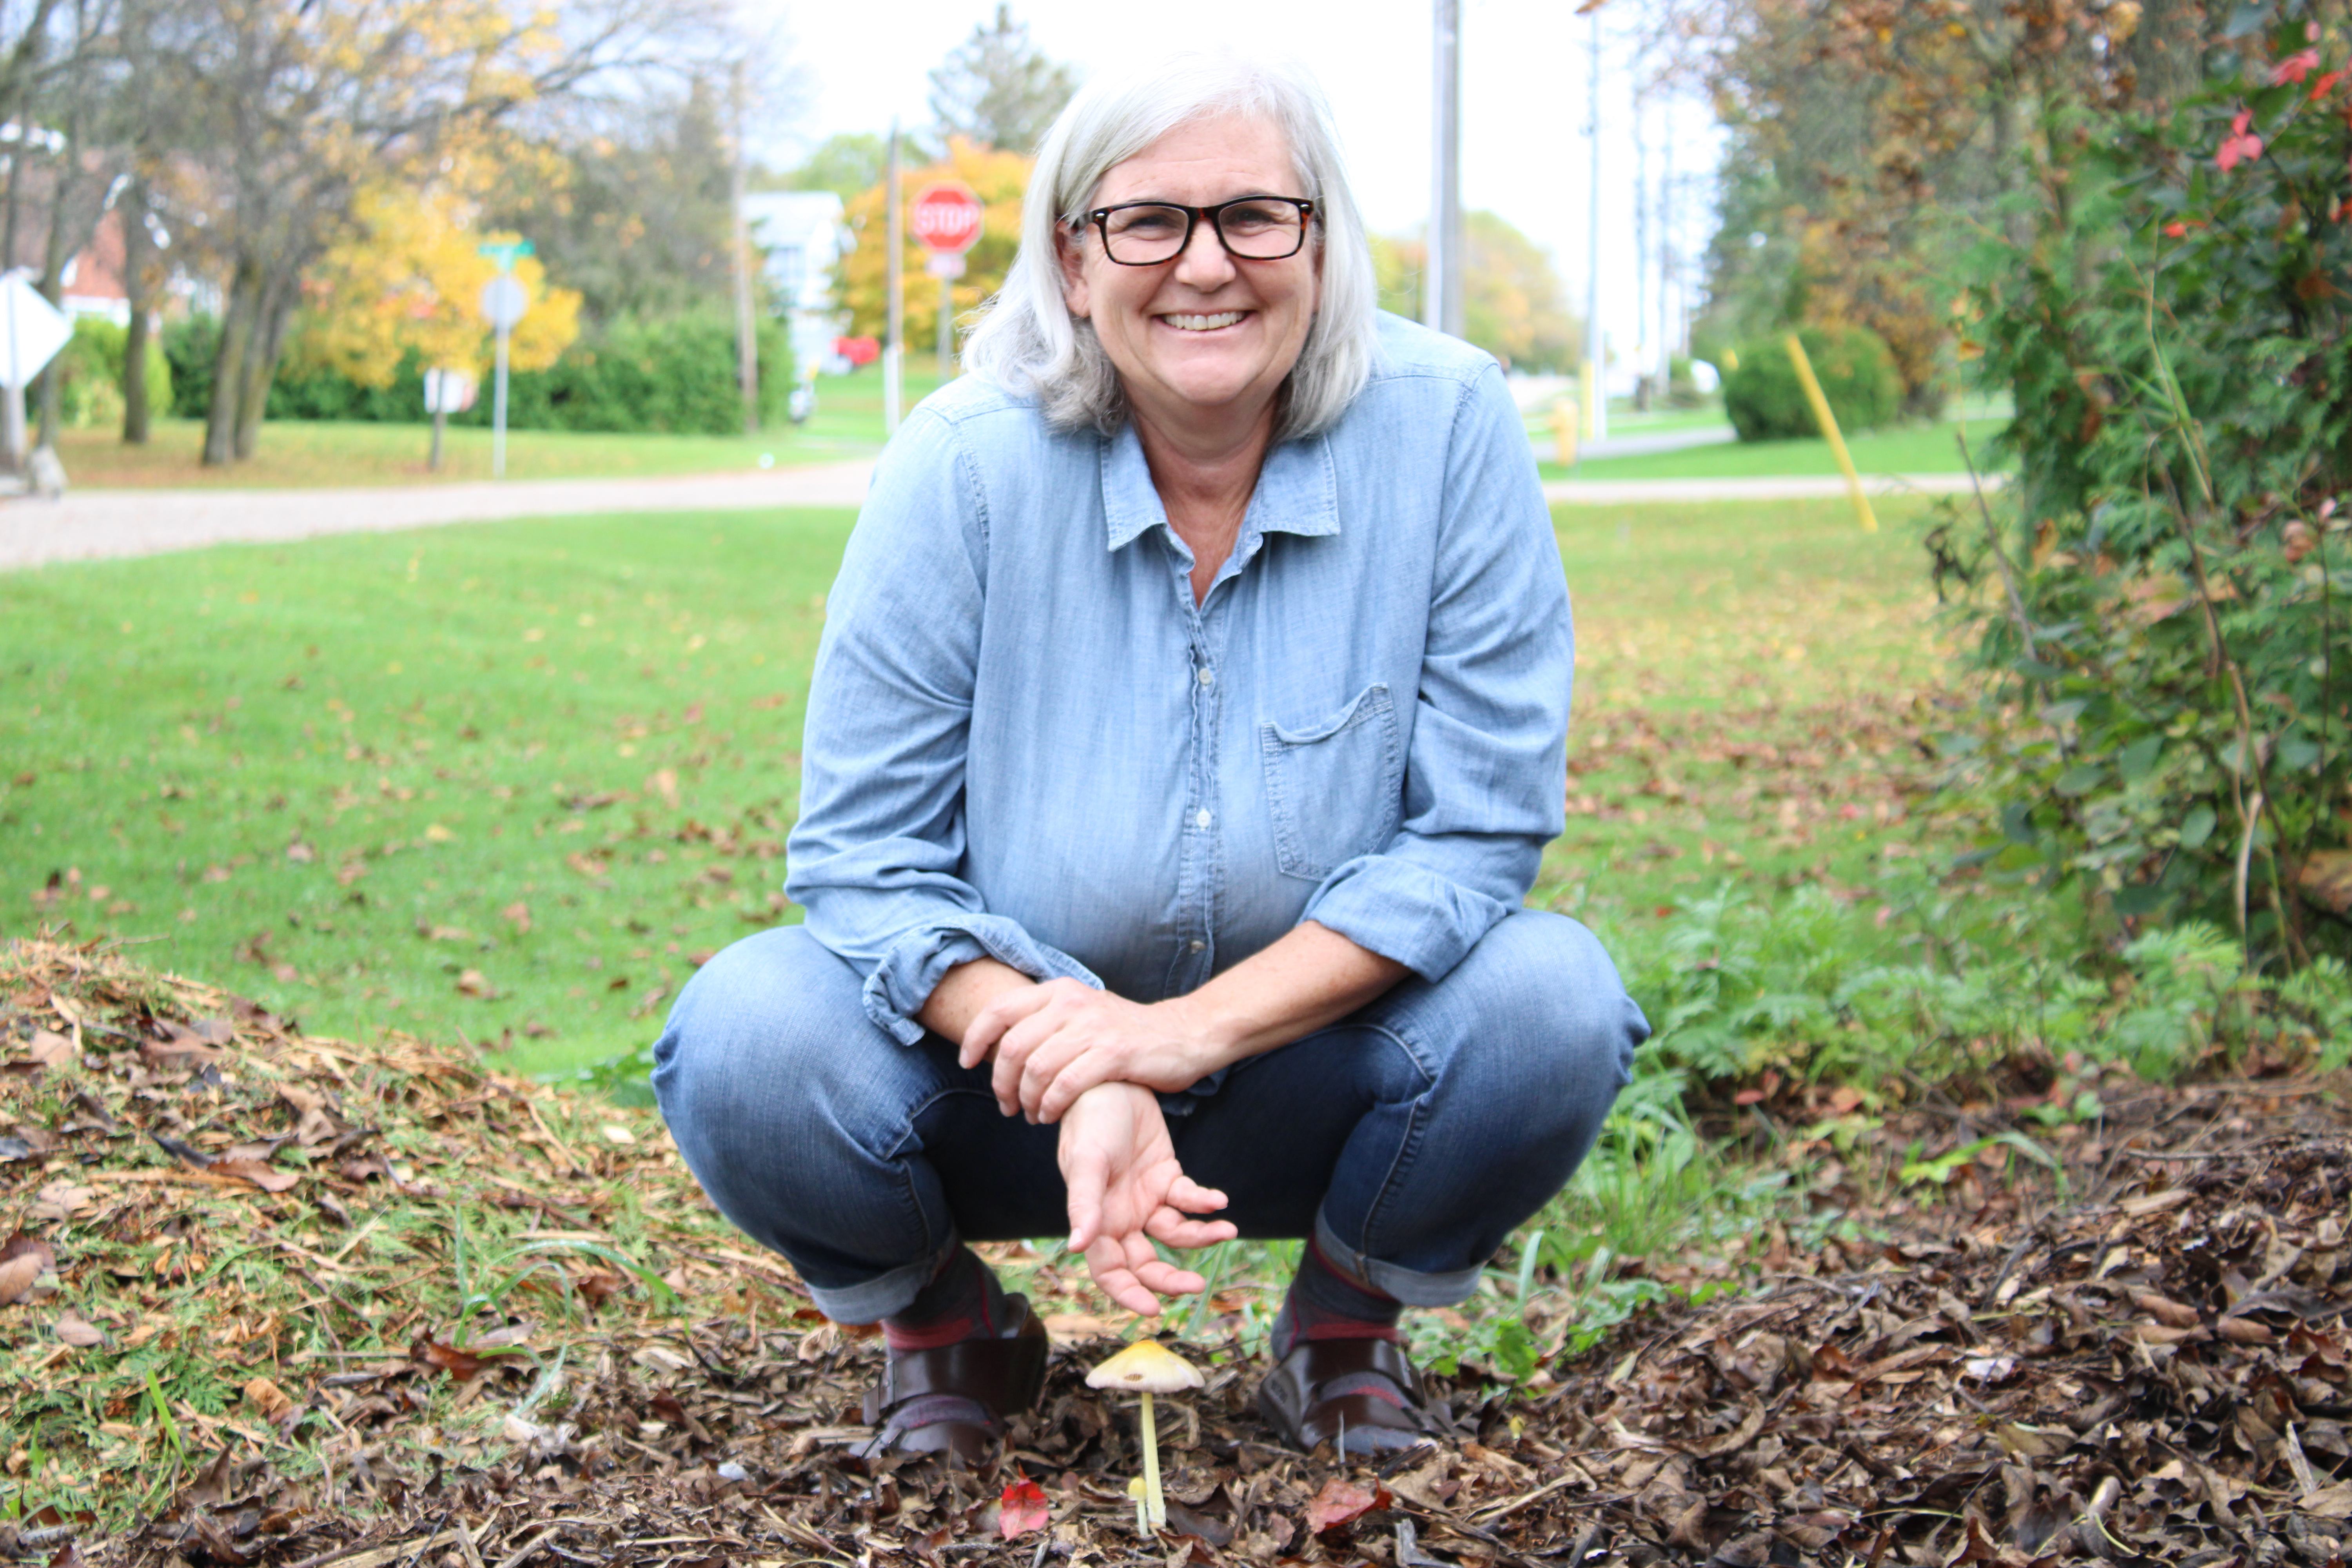 Patty Chapman is an avid gardener. She checks her yard each day for new mushrooms. Maureen Strickland/Kicker